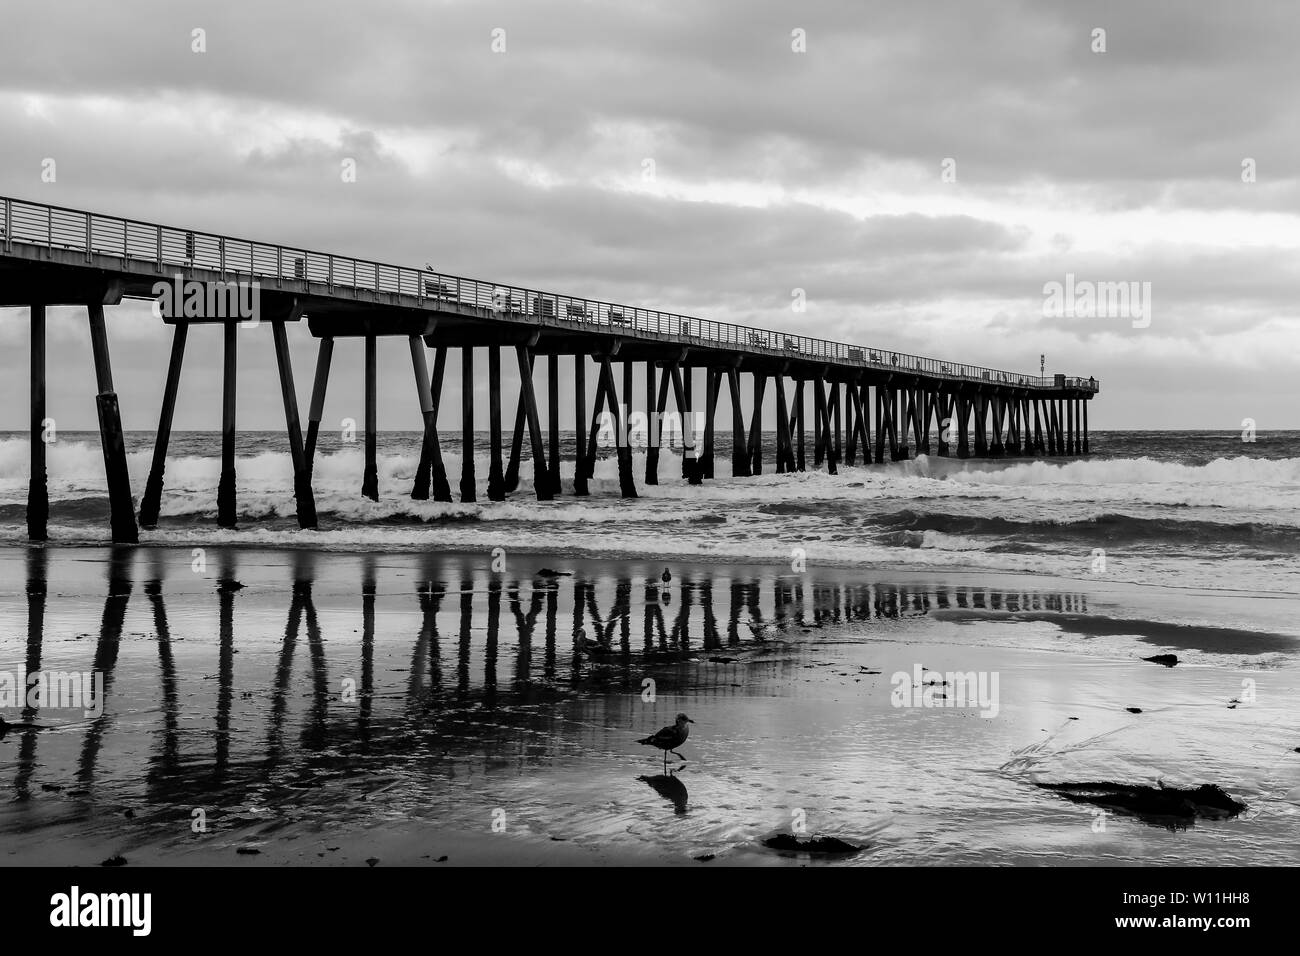 Hermosa Beach Pier (Los Angeles, USA) Reflection in monochrome Stock Photo